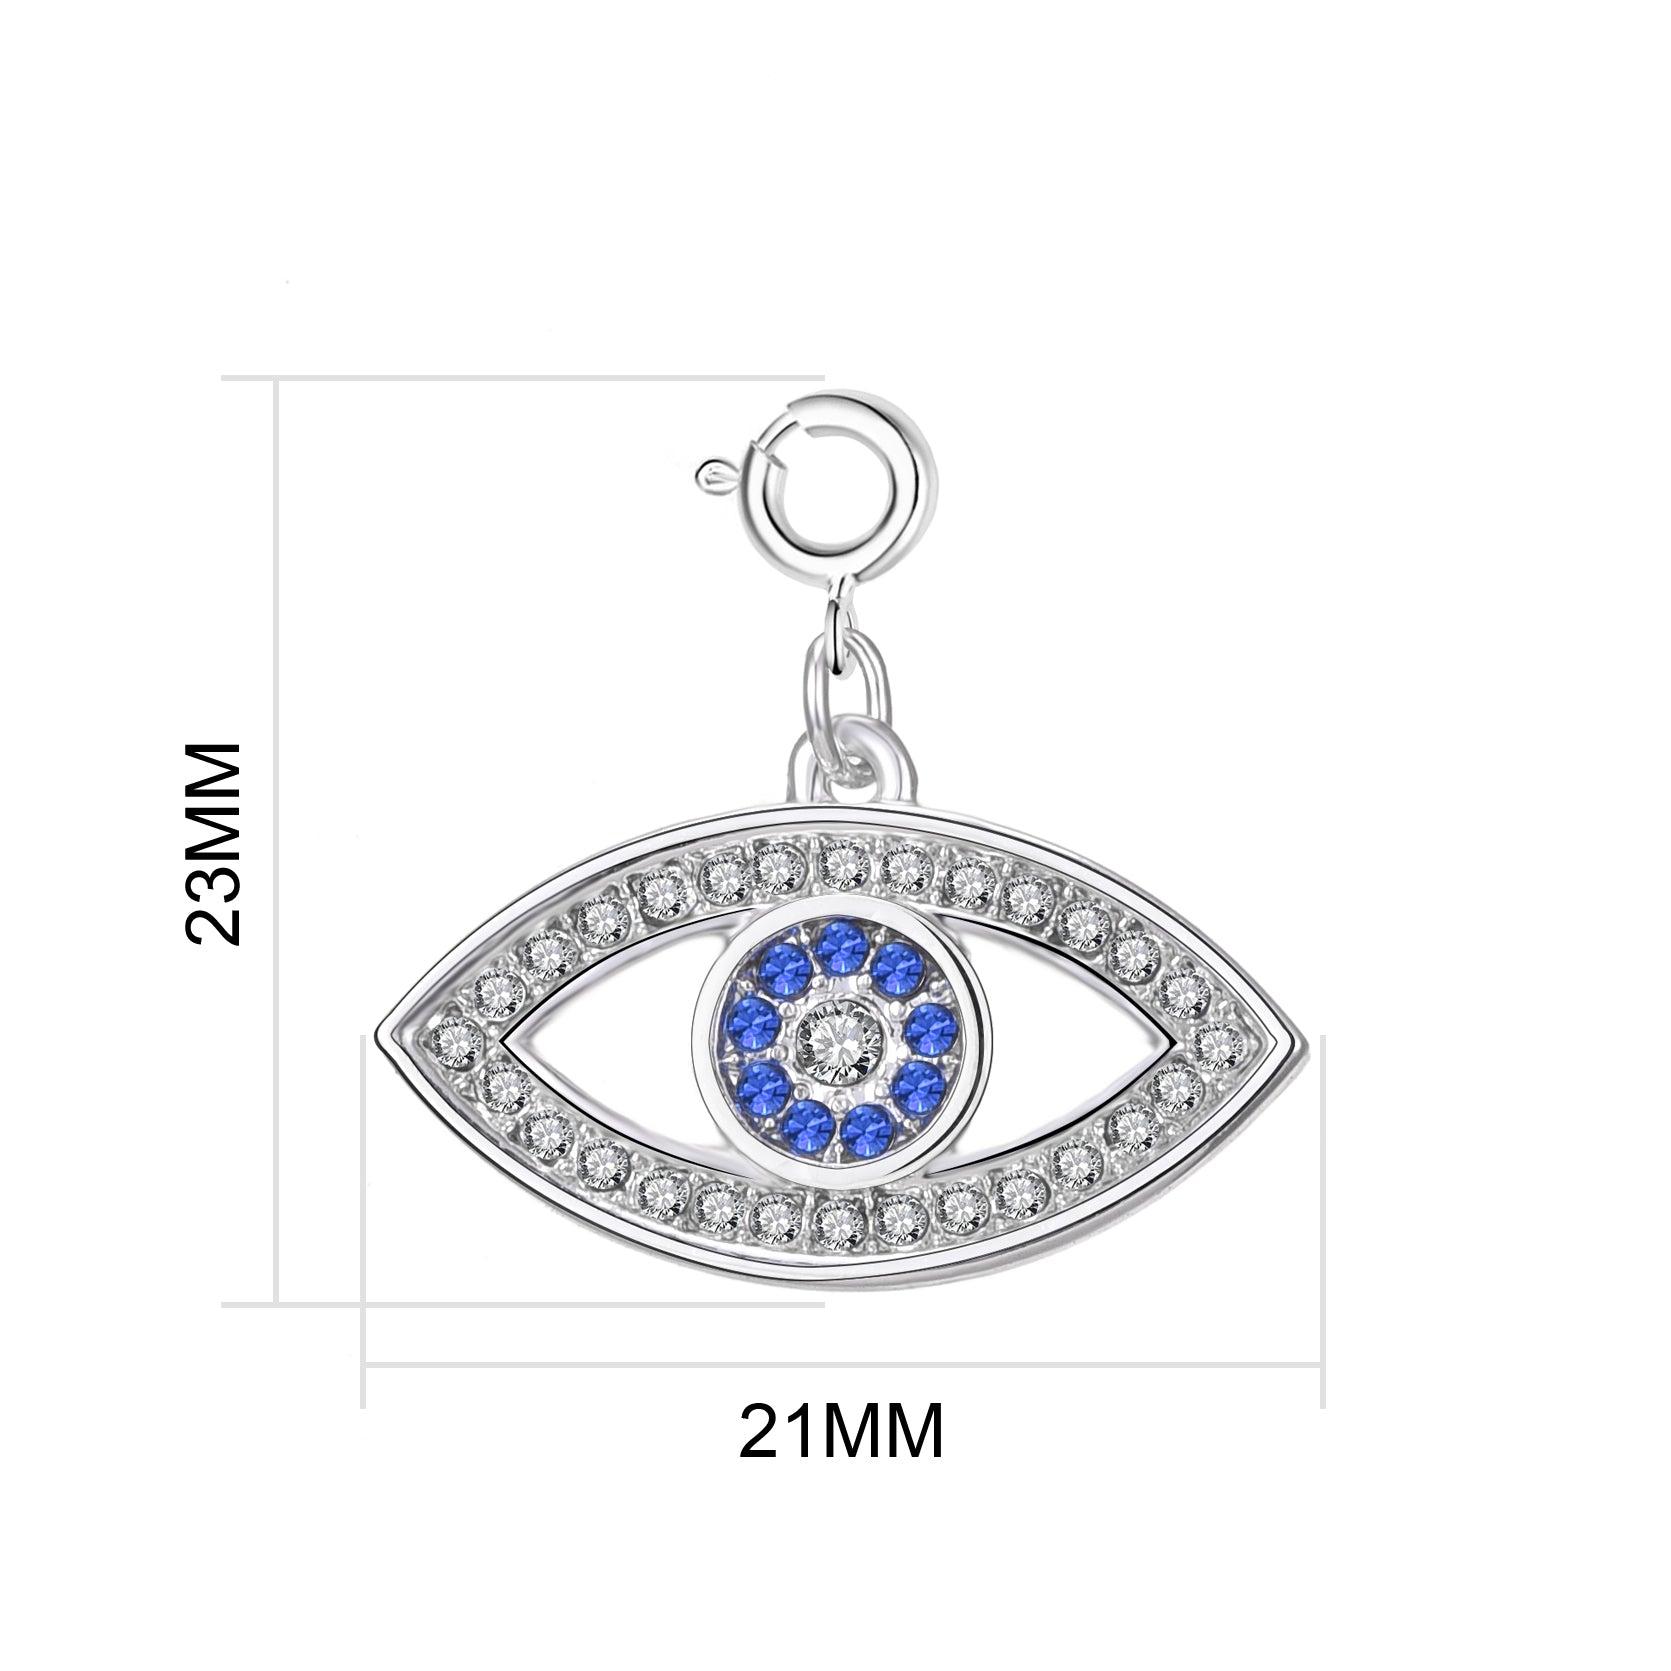 Evil Eye Charm Created with Zircondia® Crystals